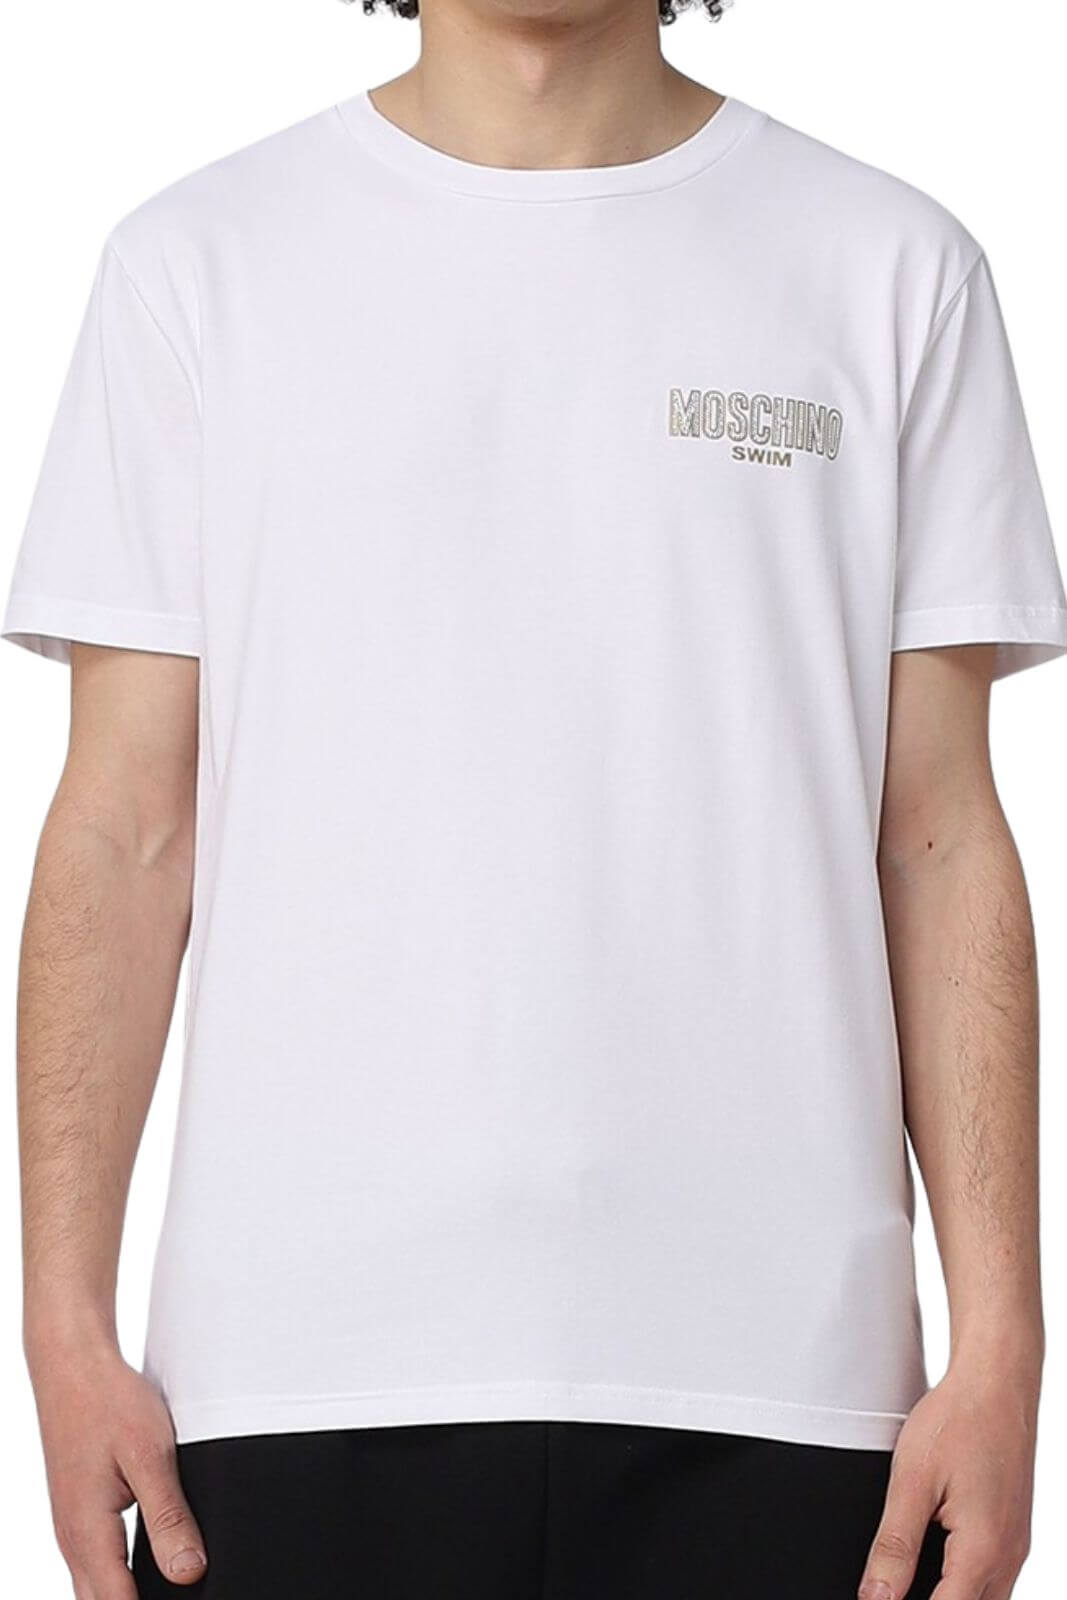 Moschino Swim T-shirt Uomo con logo in strass